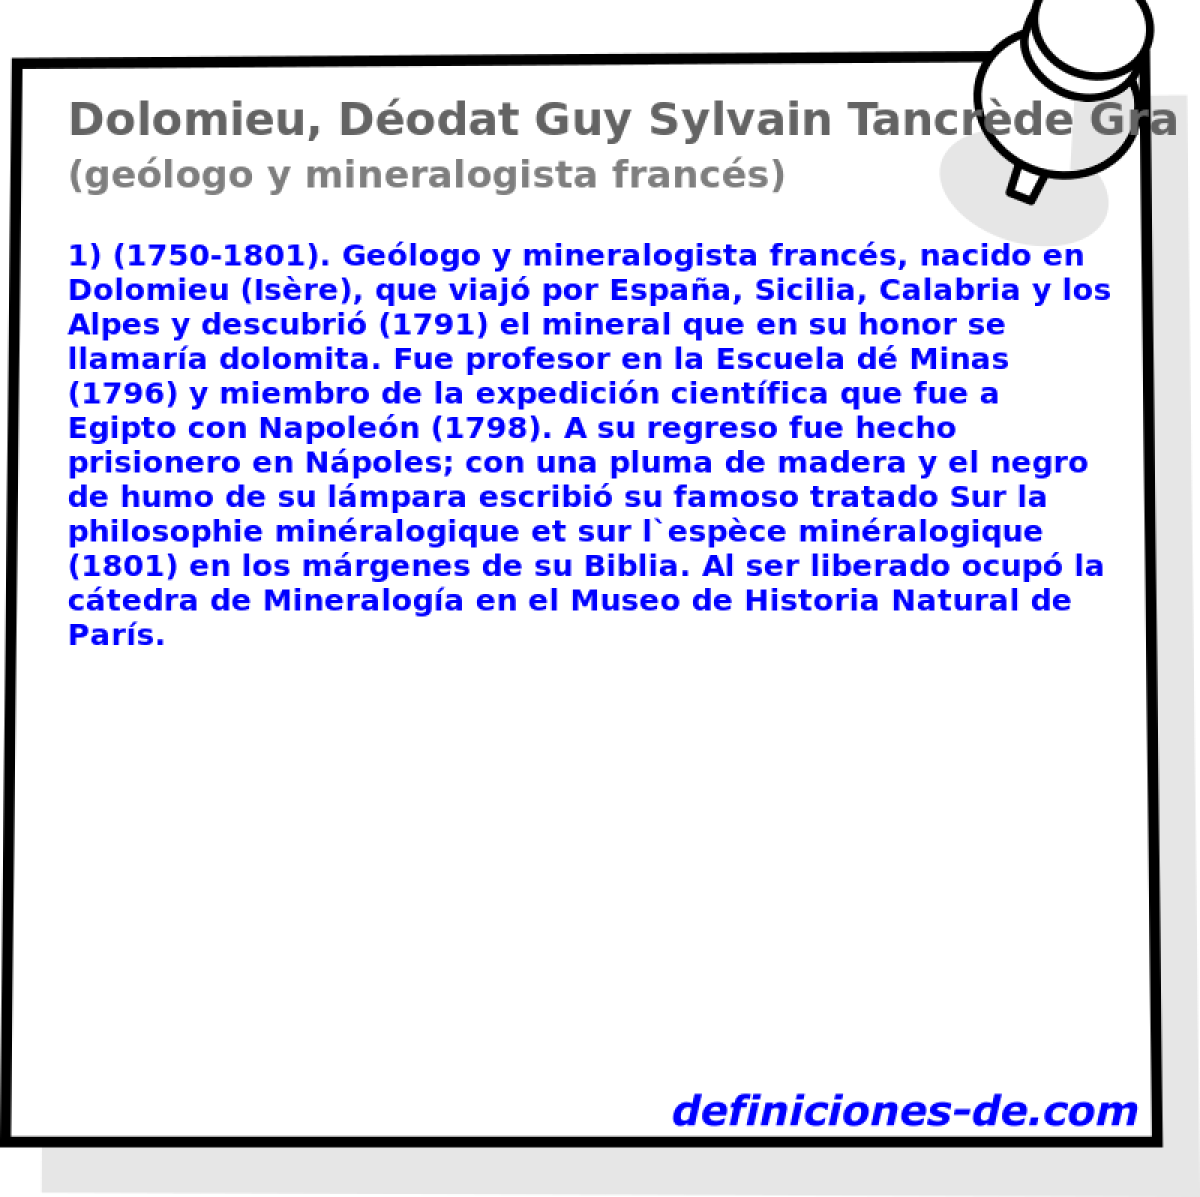 Dolomieu, Dodat Guy Sylvain Tancrde Gratet De (gelogo y mineralogista francs)